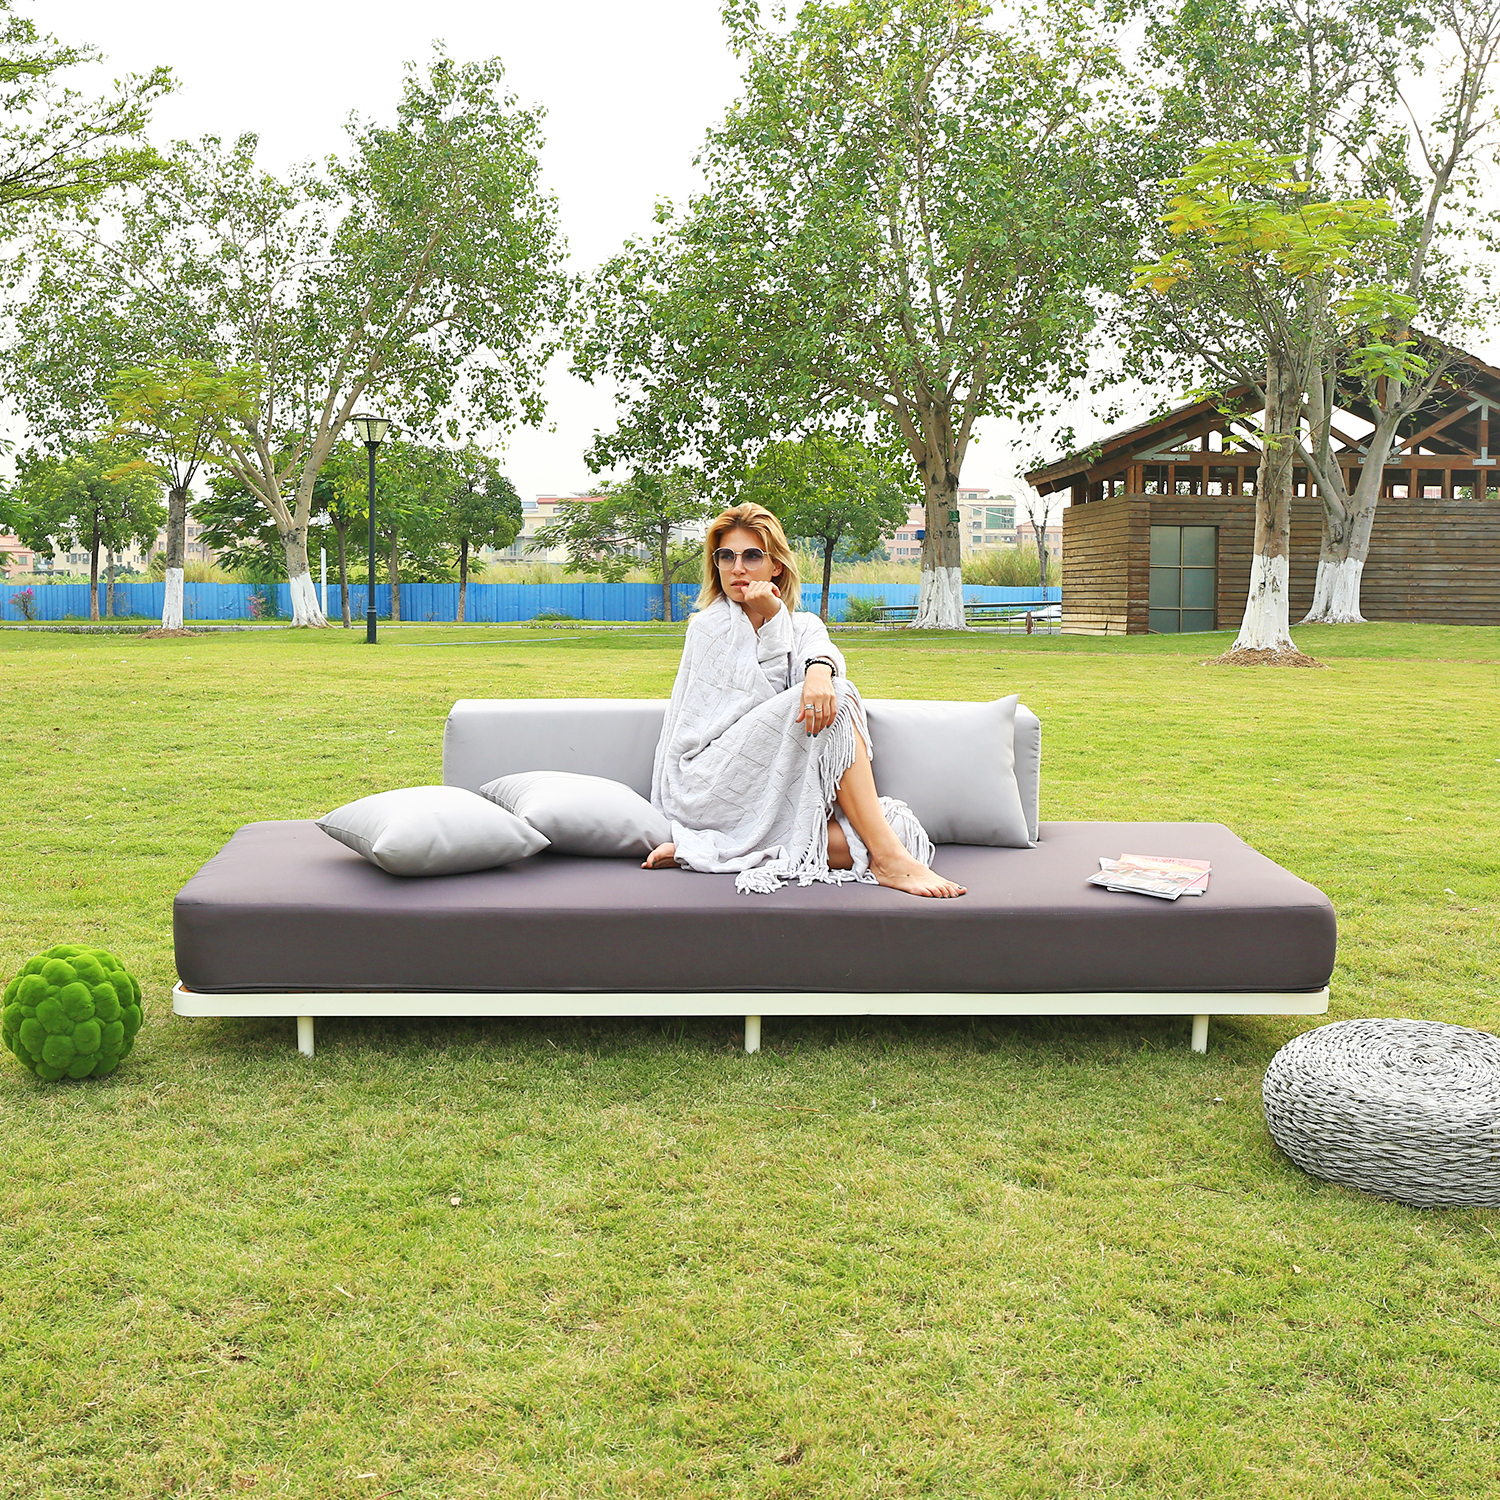 Modern Patio Garden Hotel Home Resort Rattan Wicker Leisure Outdoor Sofa